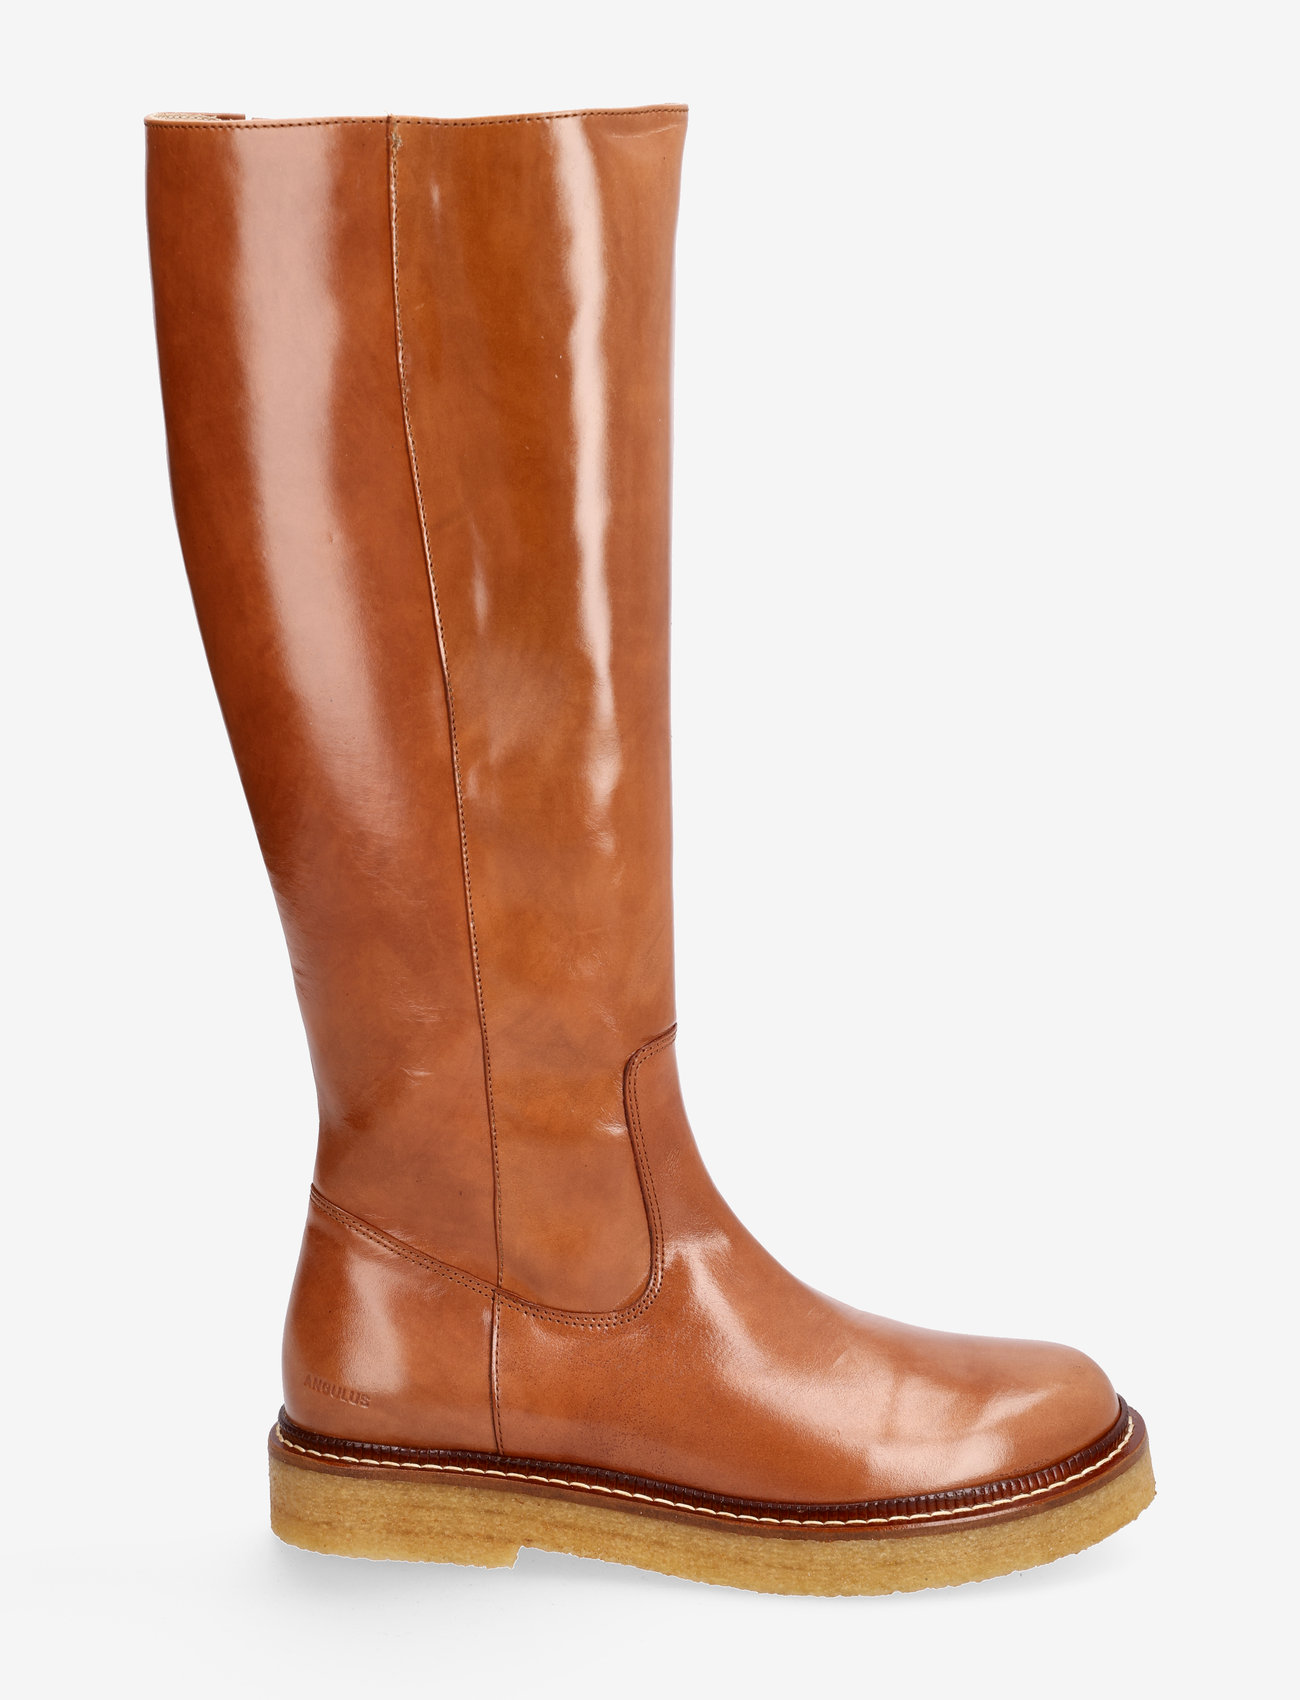 ANGULUS - Boots - flat - kniehohe stiefel - 1838/002 cognac/dark brown - 1